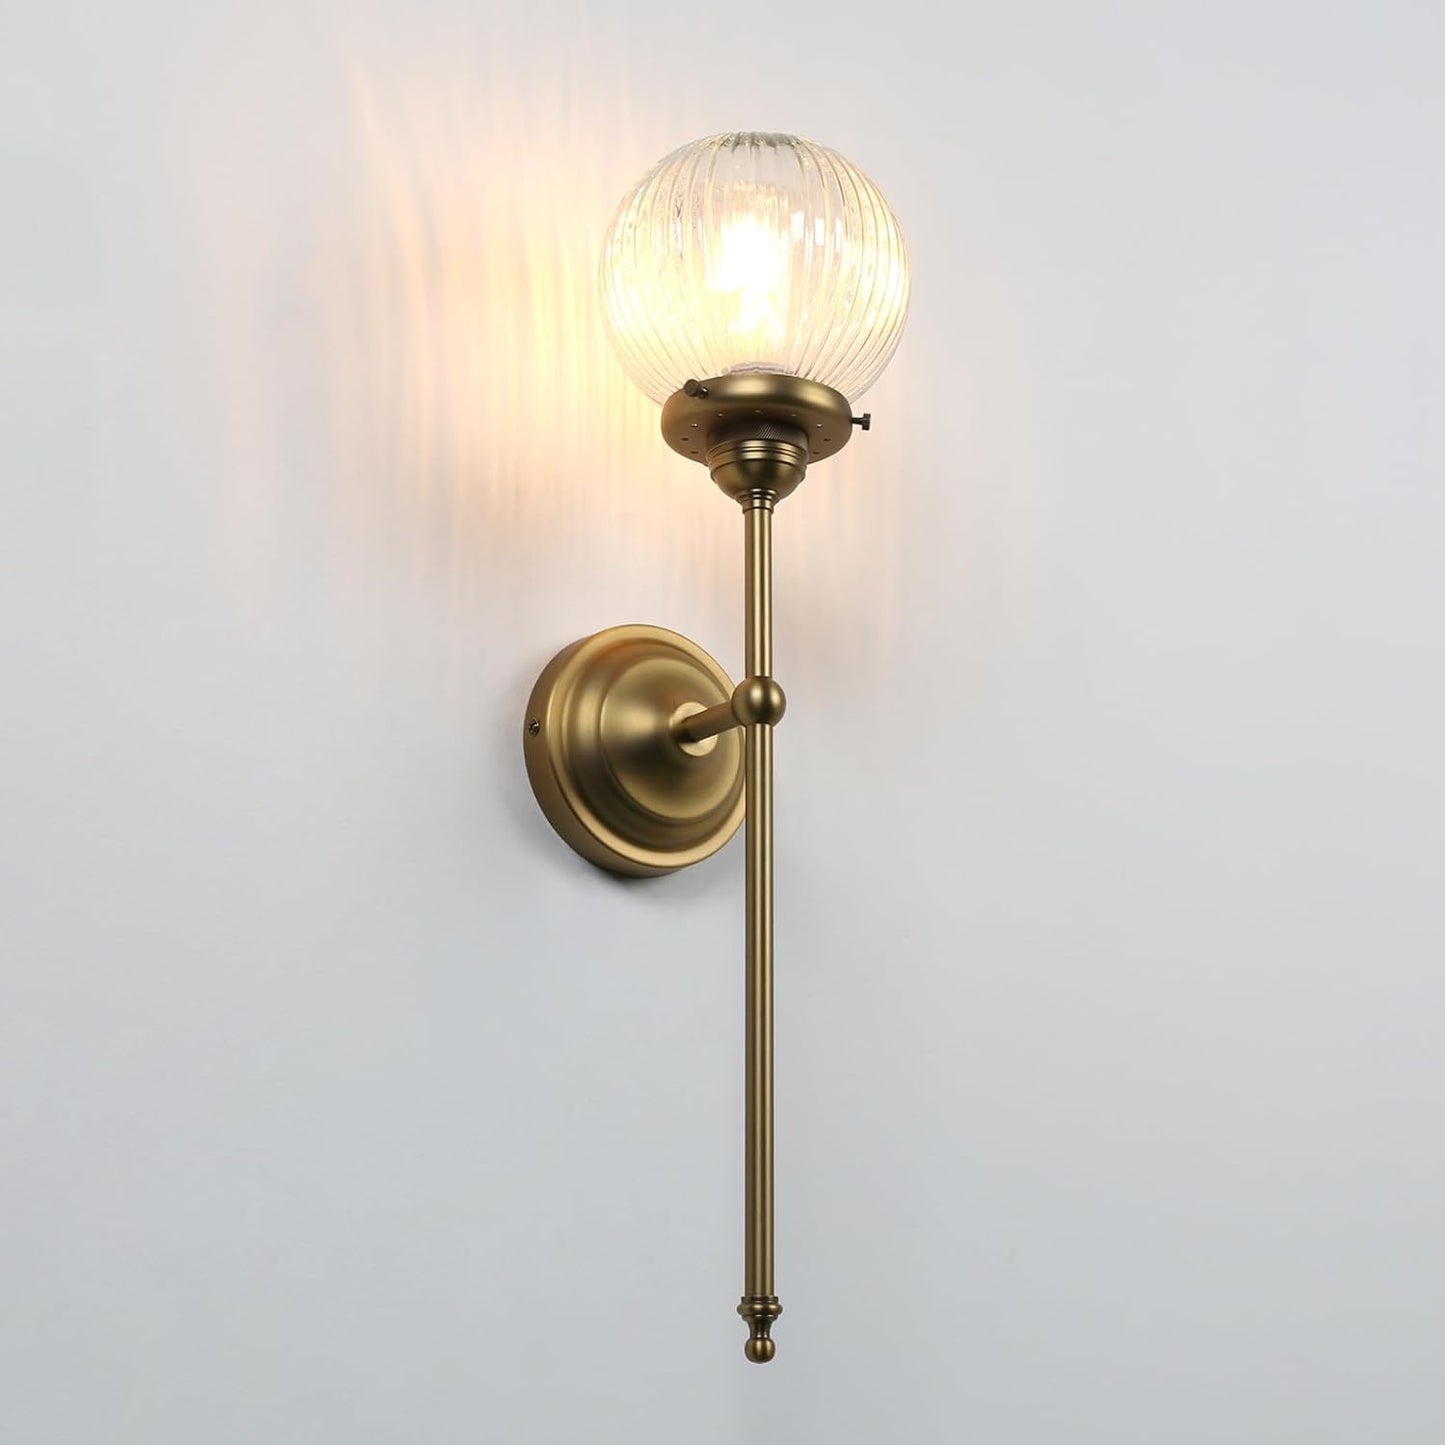 Vintage Wall Sconce Light, Industrial Hardwired Wall Vanity Lighting